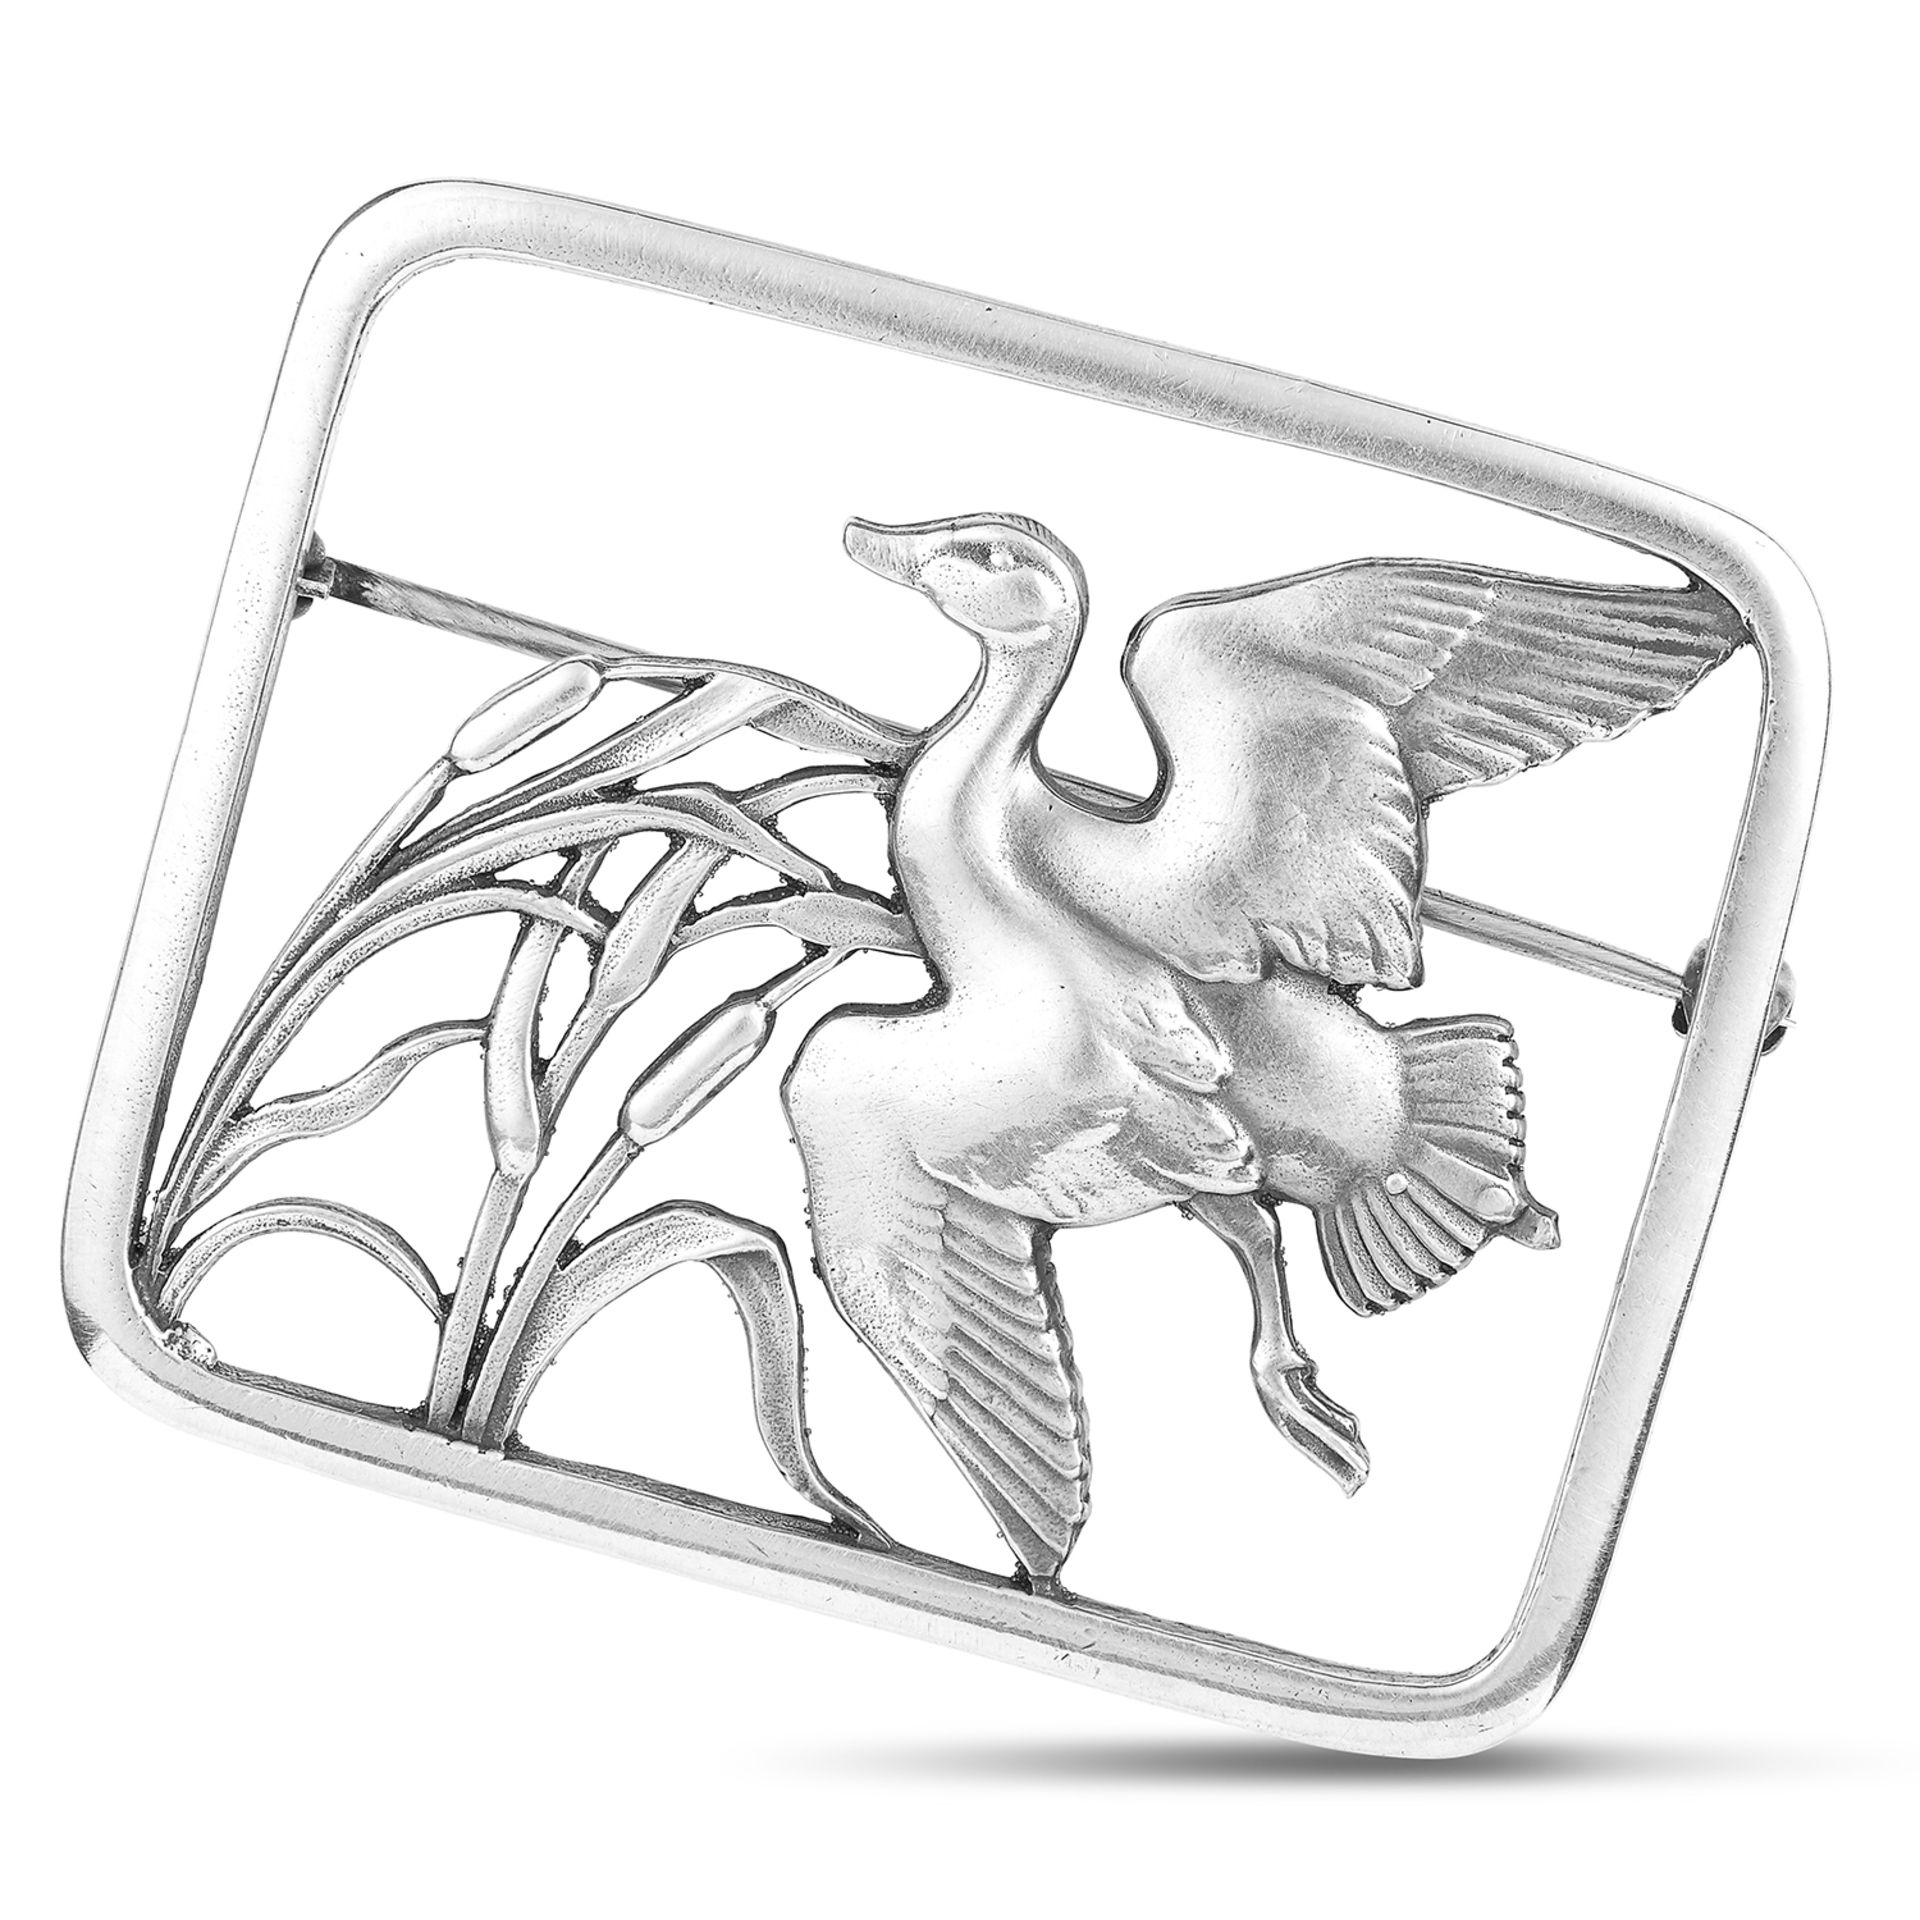 FLYING BIRD BROOCH, HUGO LIISBERG FOR GEORG JENSEN, CIRCA 1930 in sterling silver, design no.300,